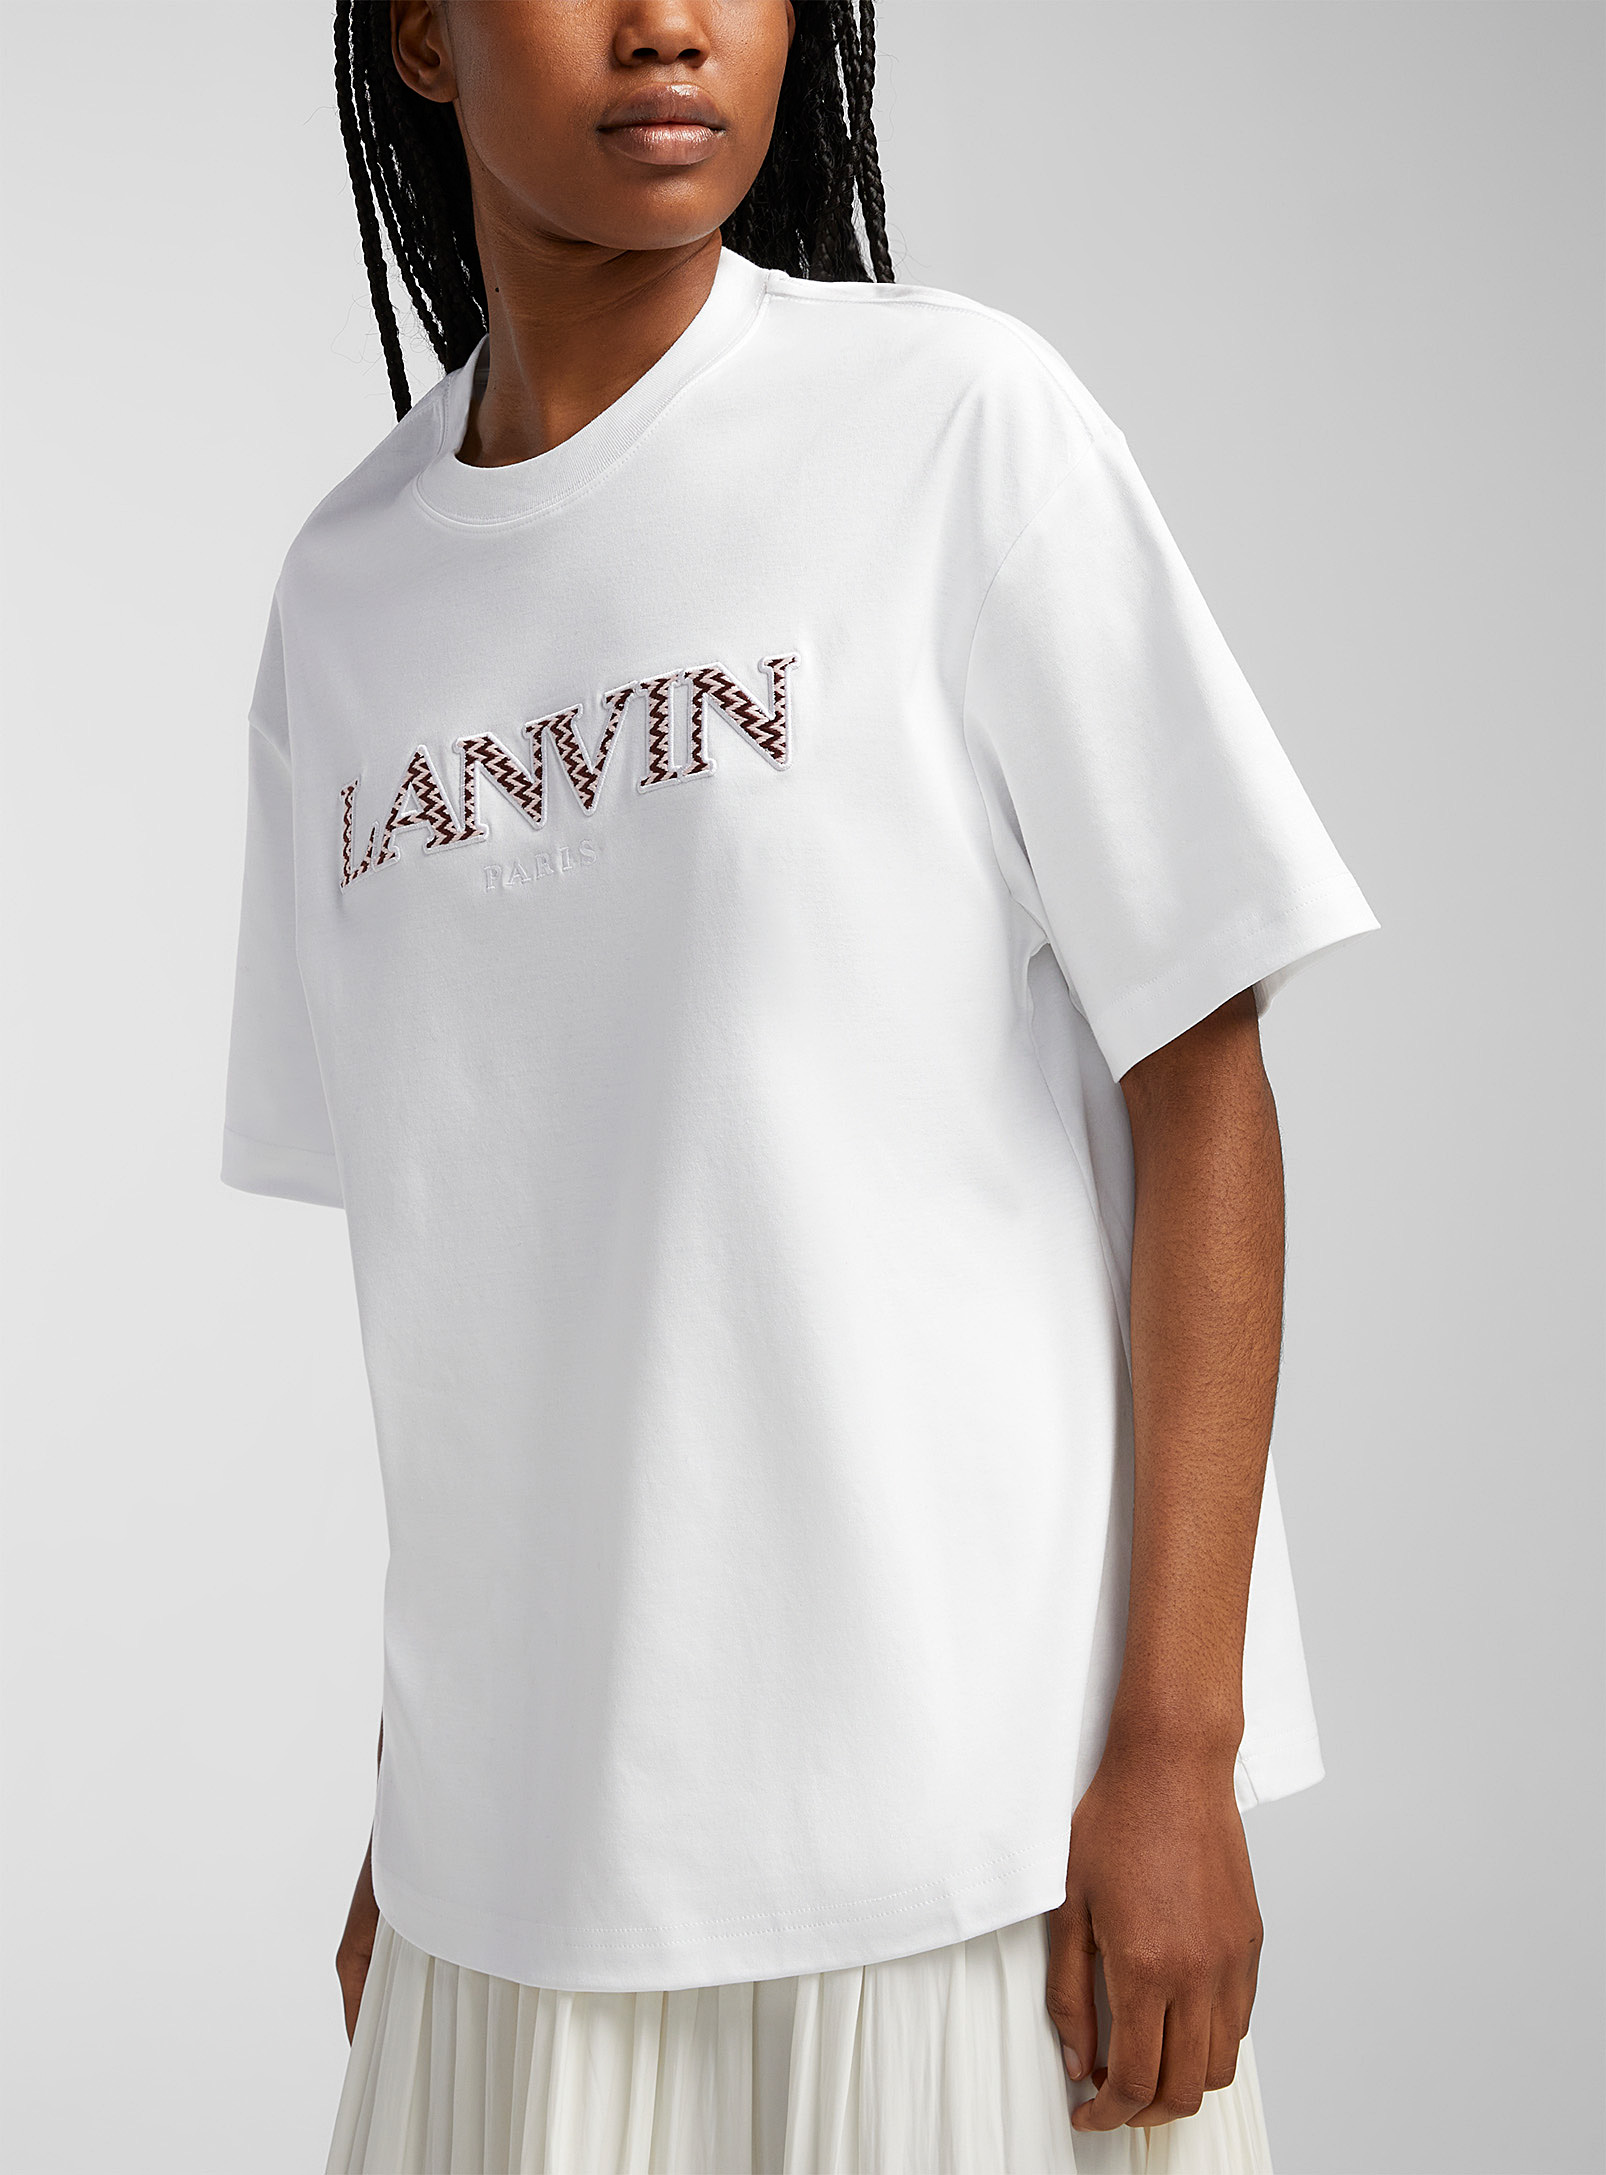 Lanvin - Women's Herringbone logo T-shirt